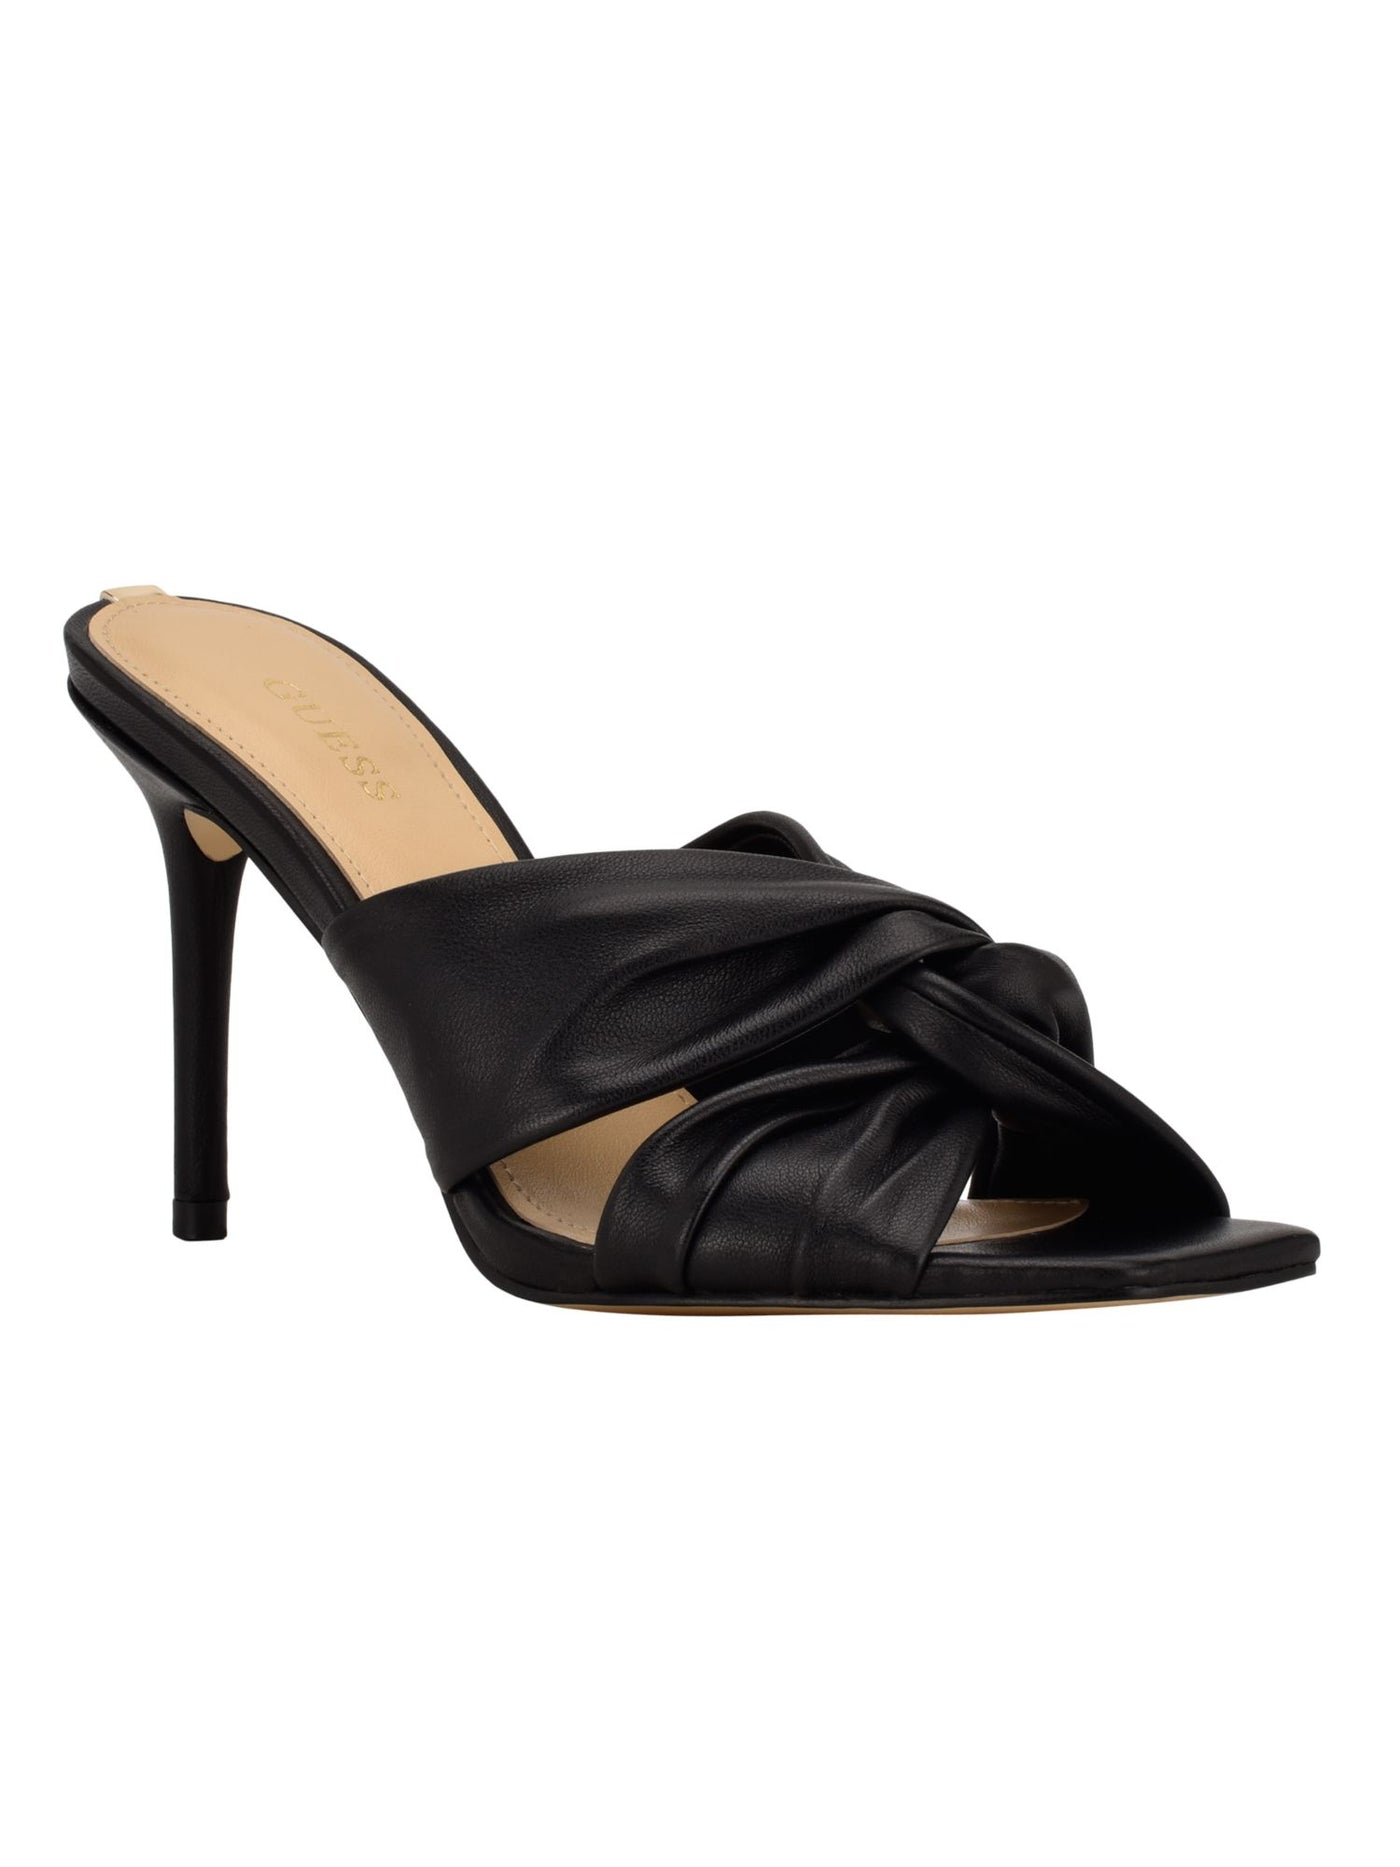 GUESS Womens Black Twisted Strap Metallic Logo Cushioned Daiva Square Toe Stiletto Slip On Leather Heeled Sandal 10 M